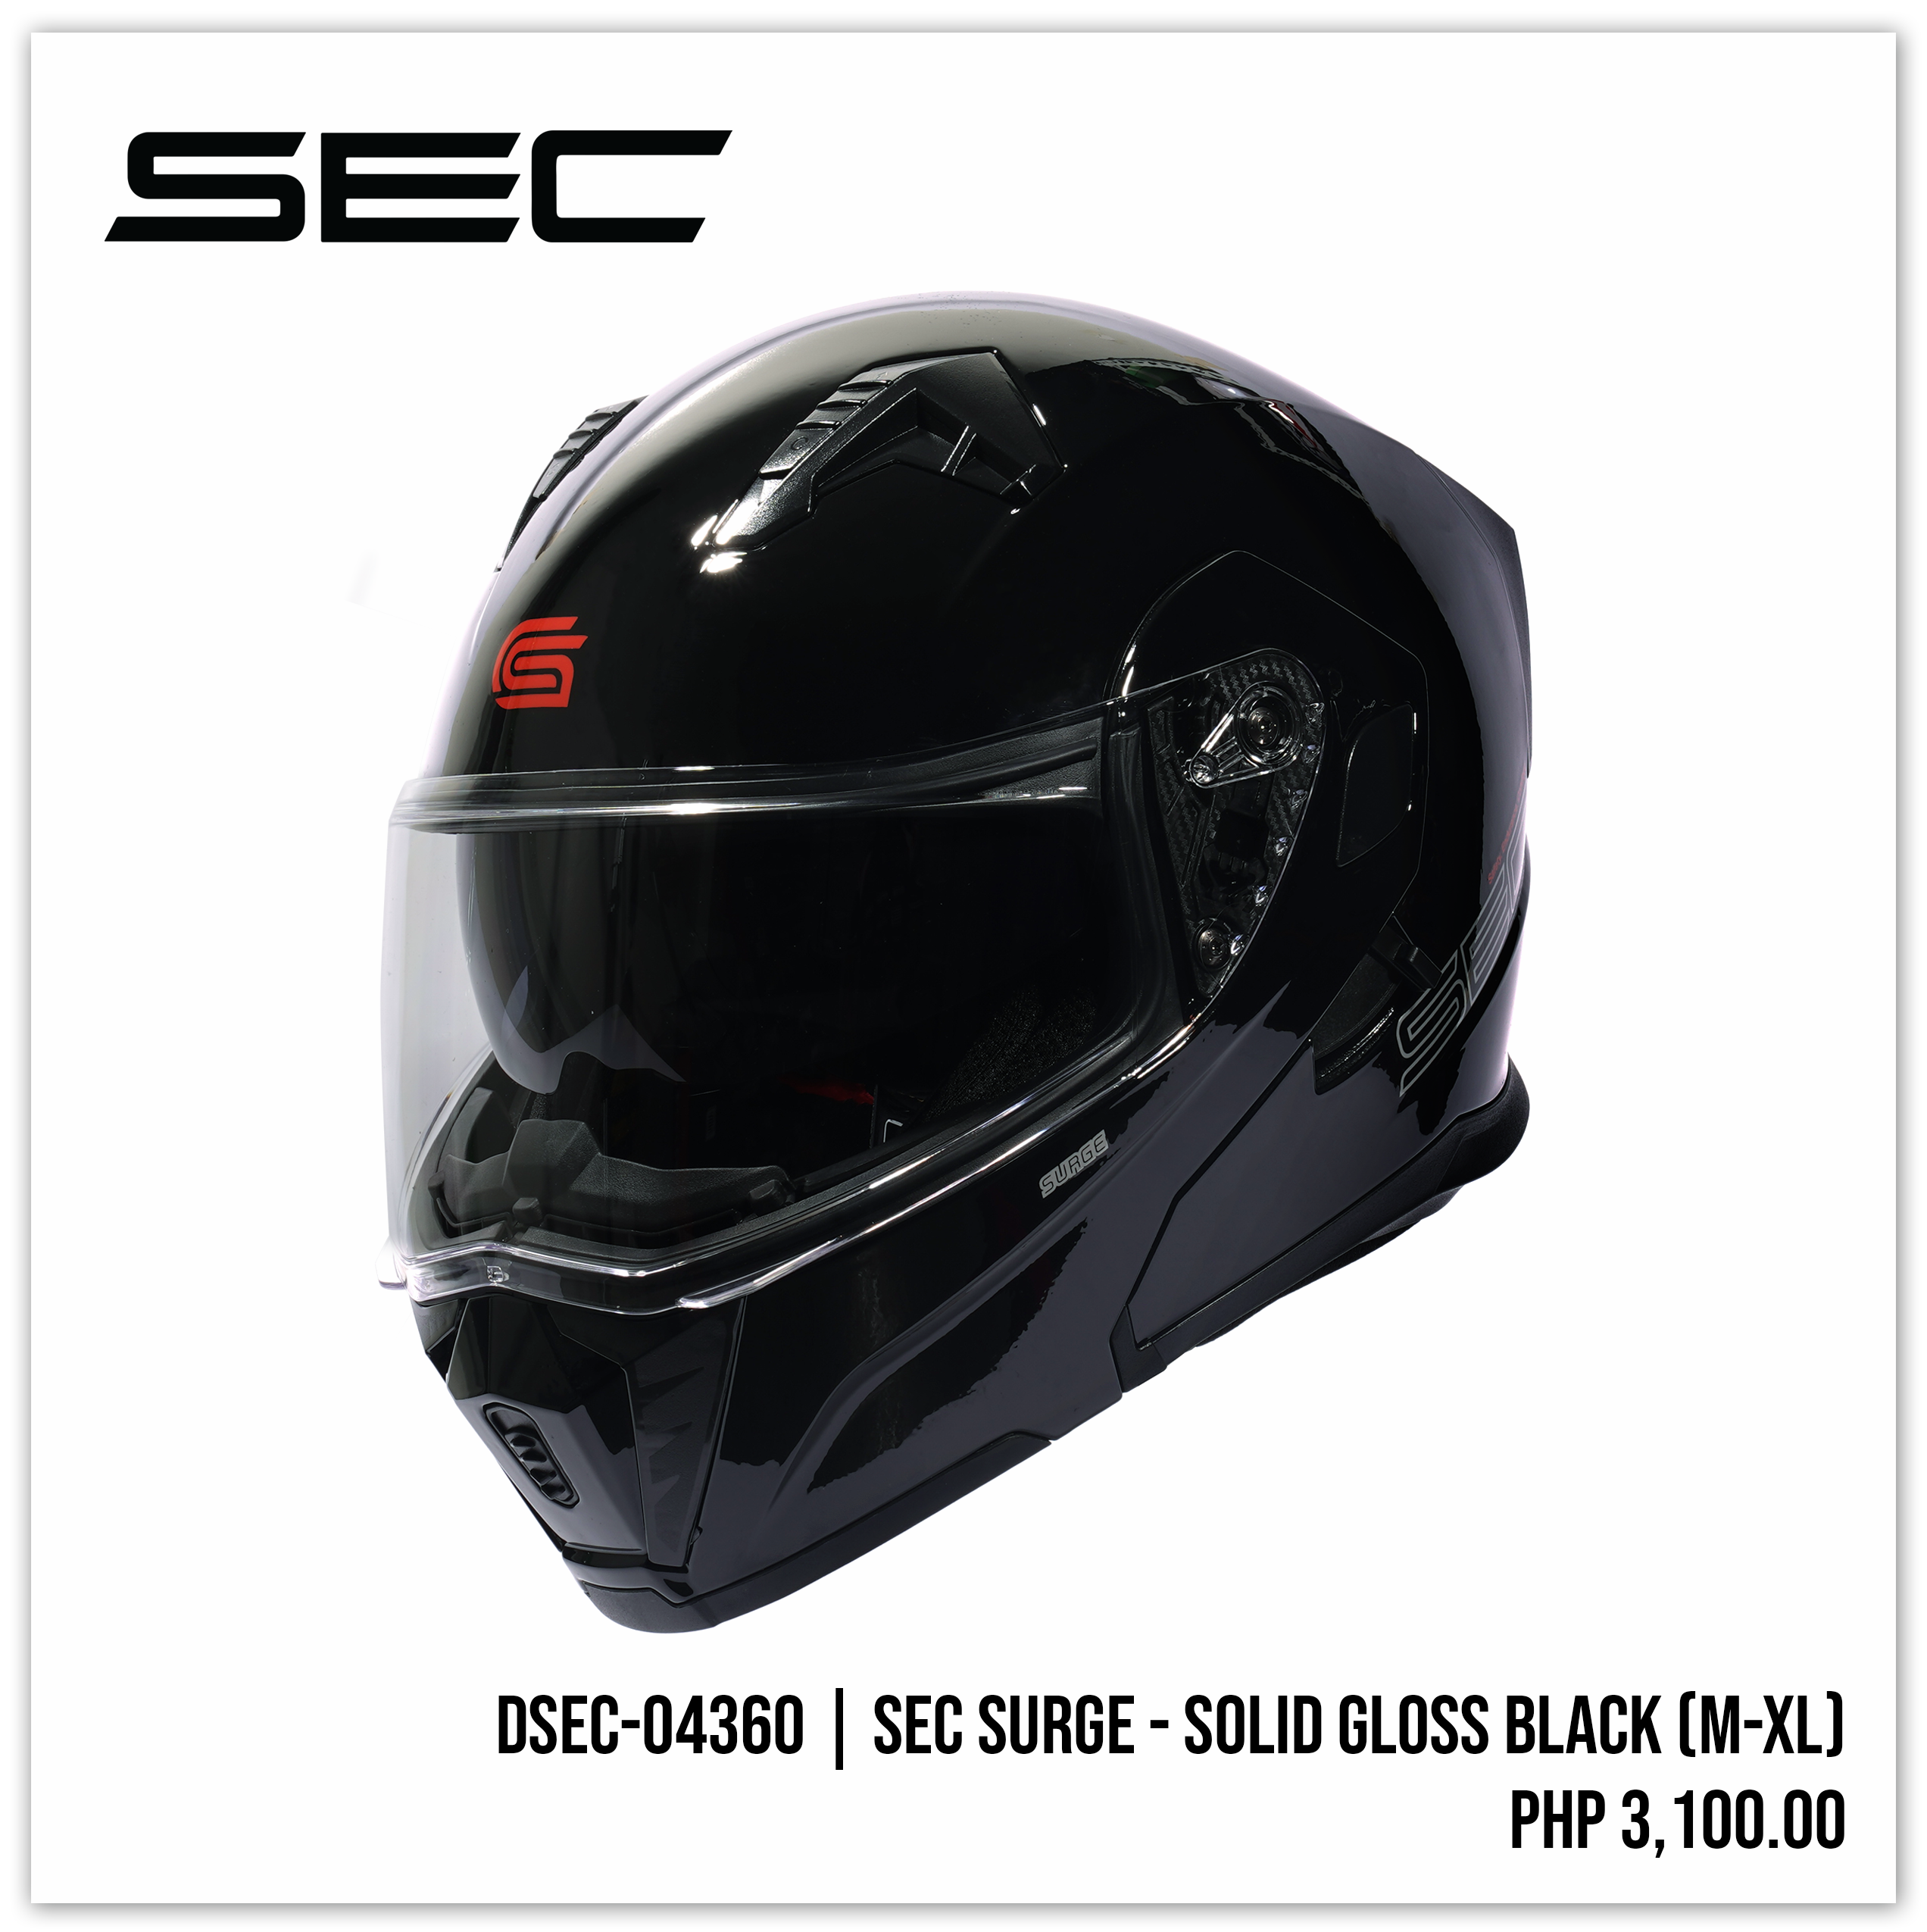 SEC Surge - Solid Gloss Black